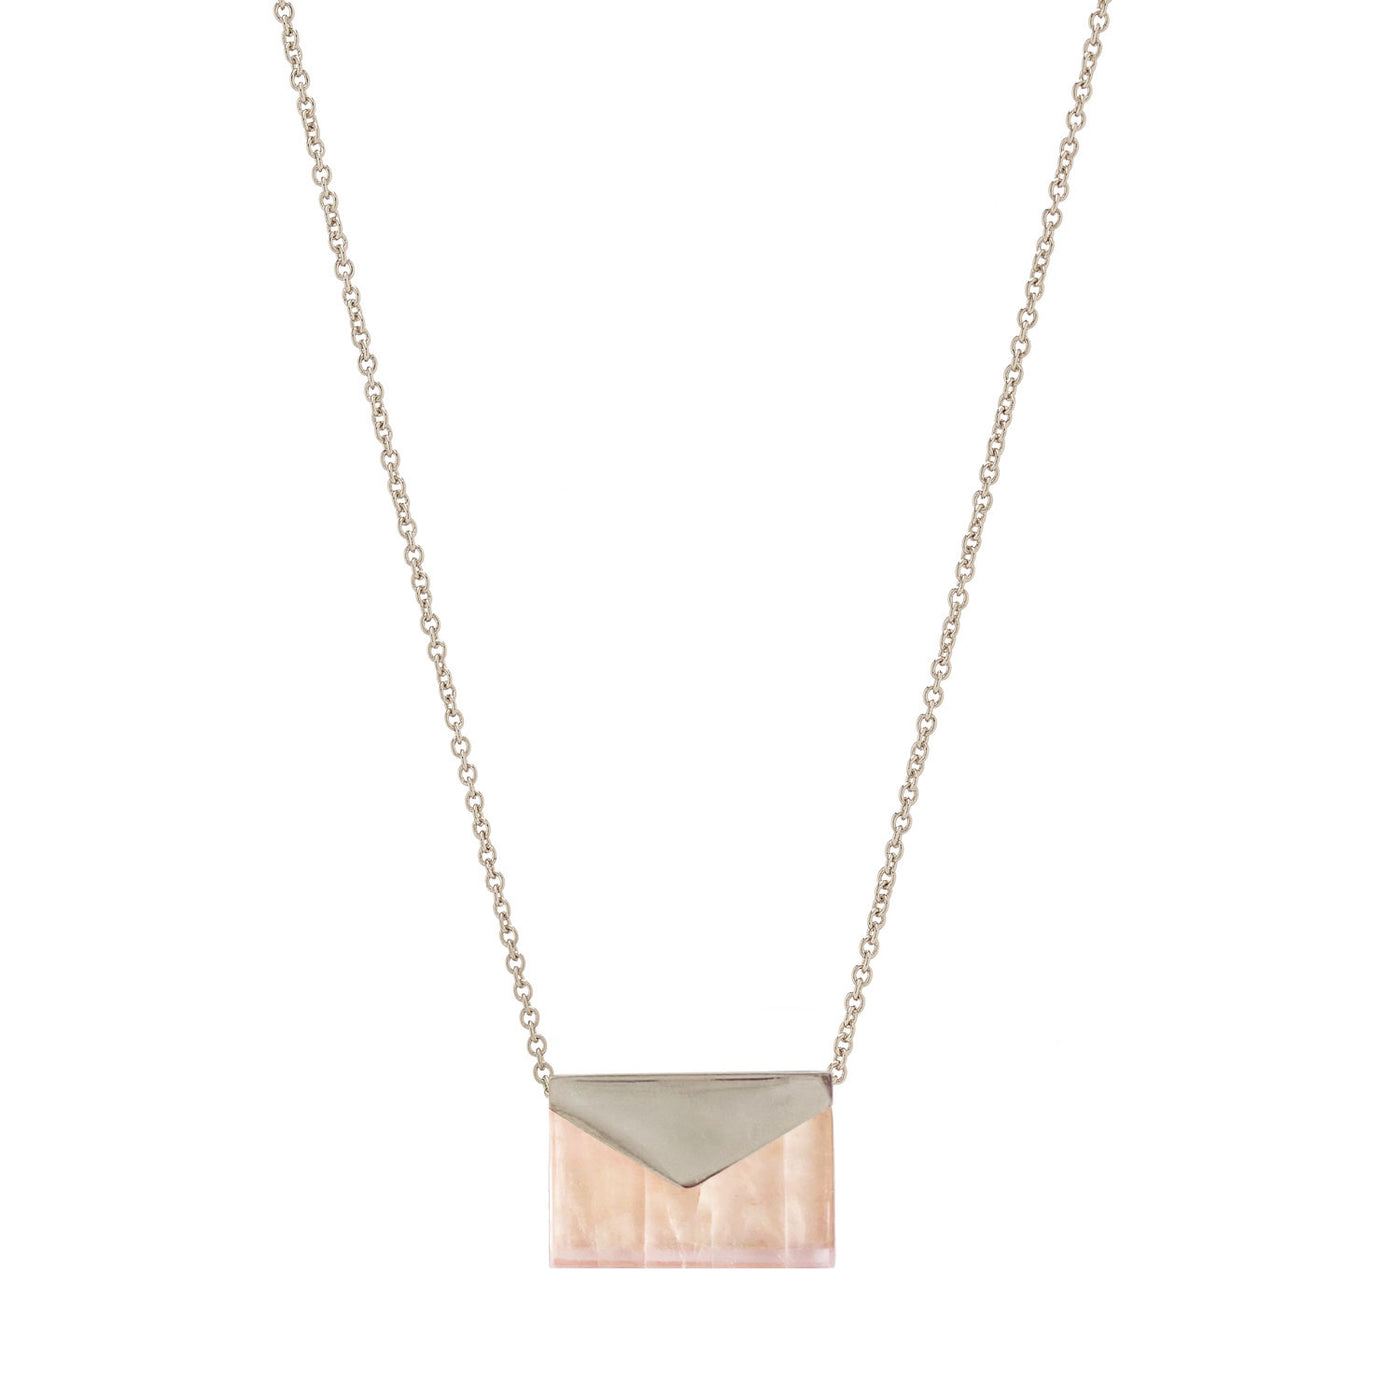 Sterling silver envelope necklace with rose quartz